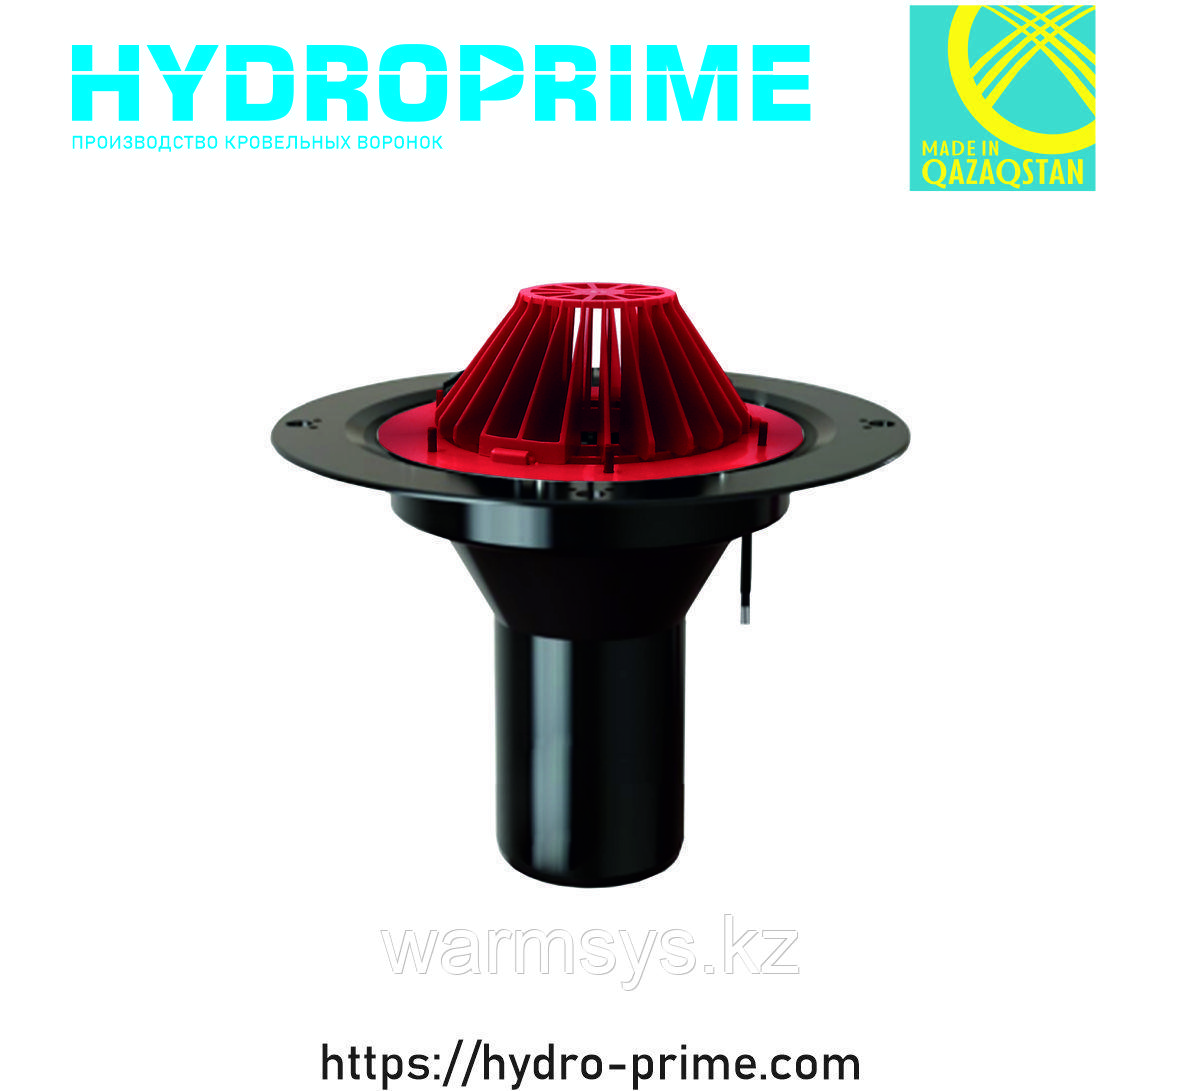 Кровельная воронка HydroPrime HPH 110x165 с электрообогревом, фото 1